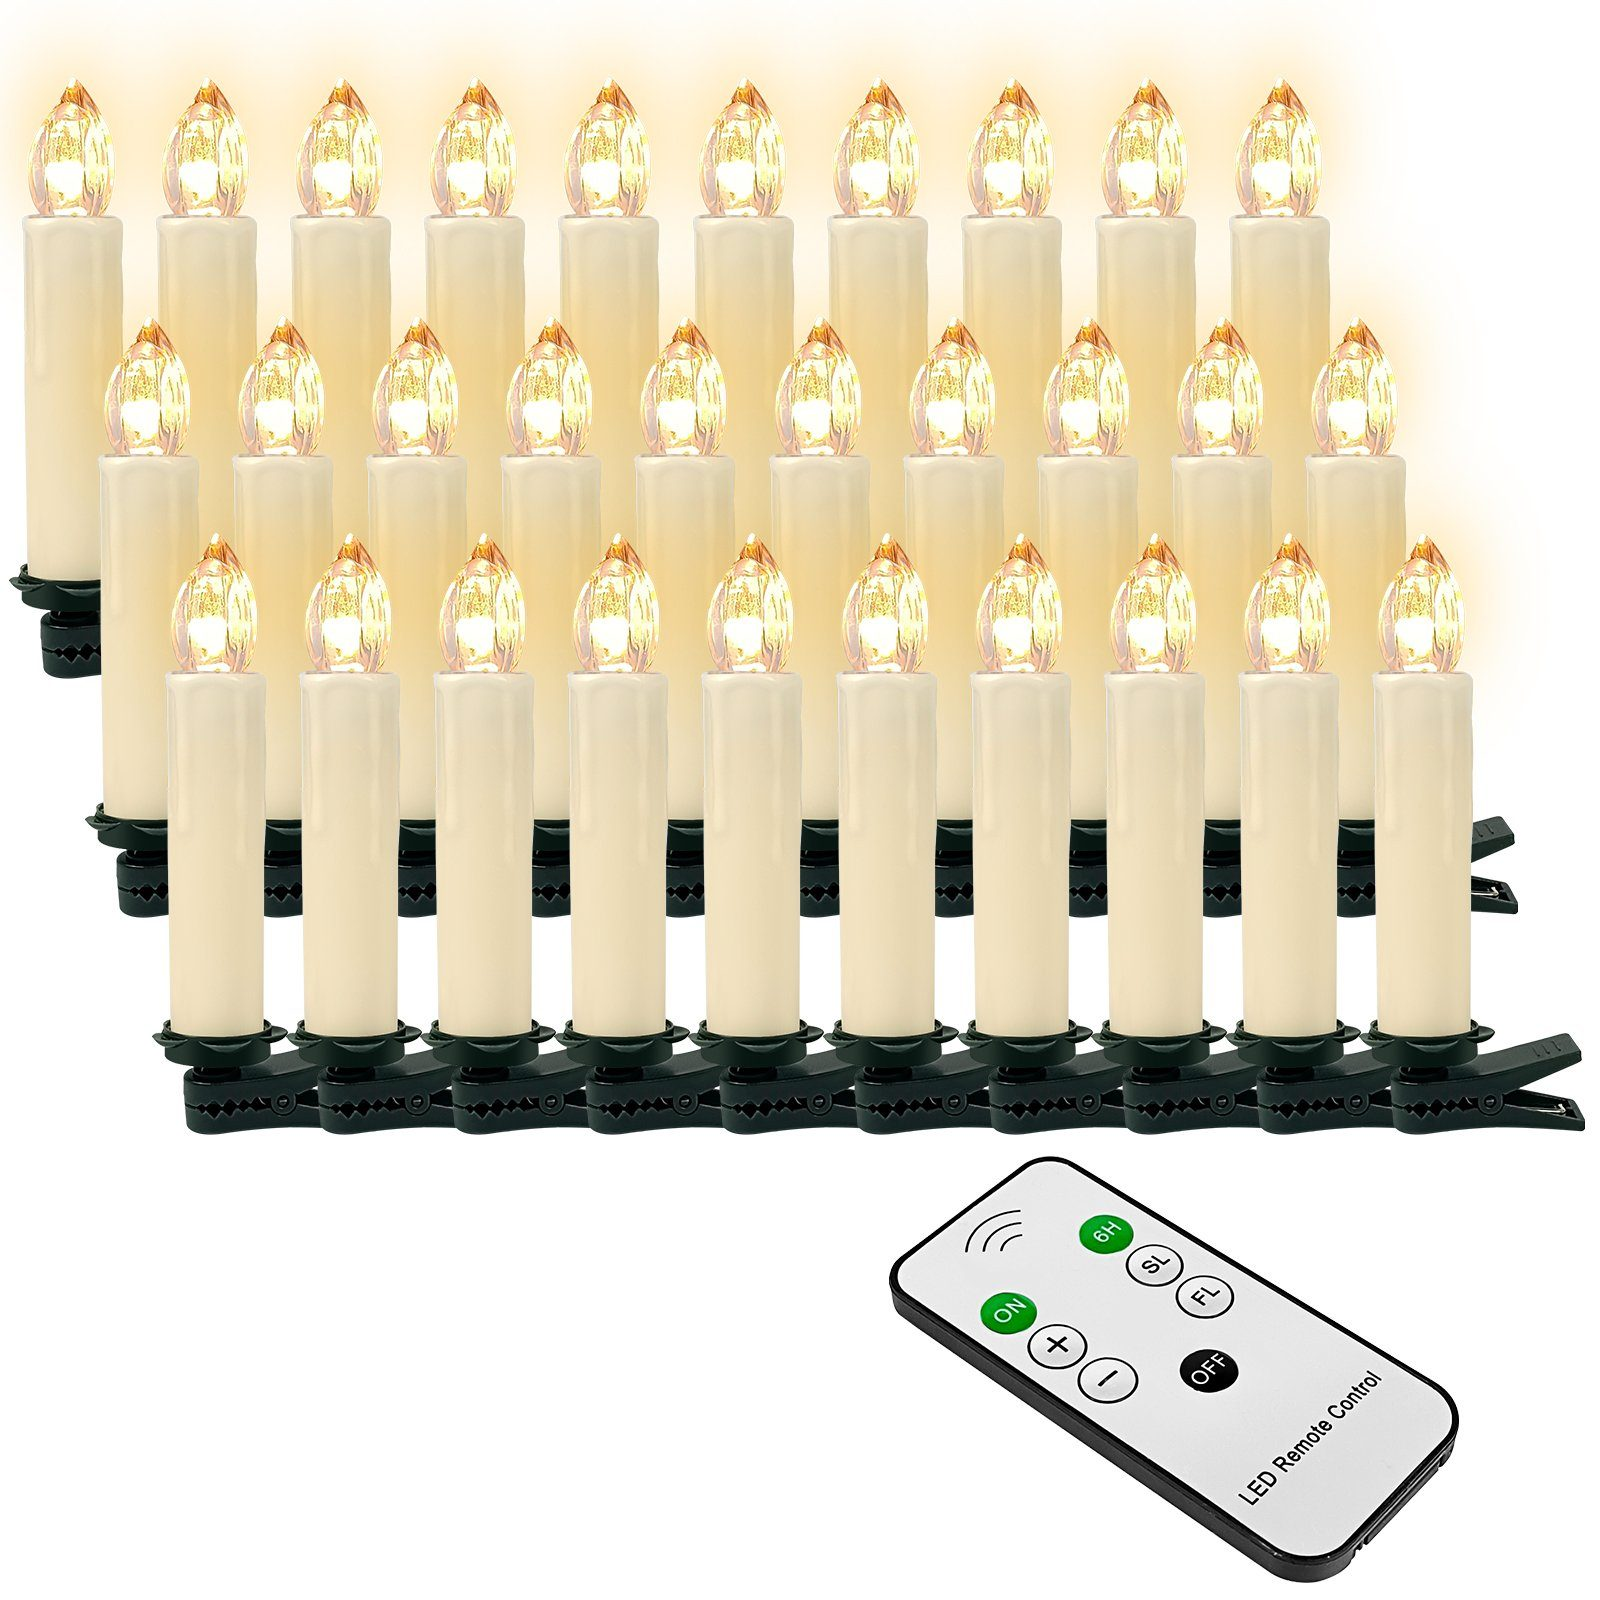 GOTOLL CH010-B Creme 10 Beige LED Weihnachtskerzen, LED-Kerze kabellose